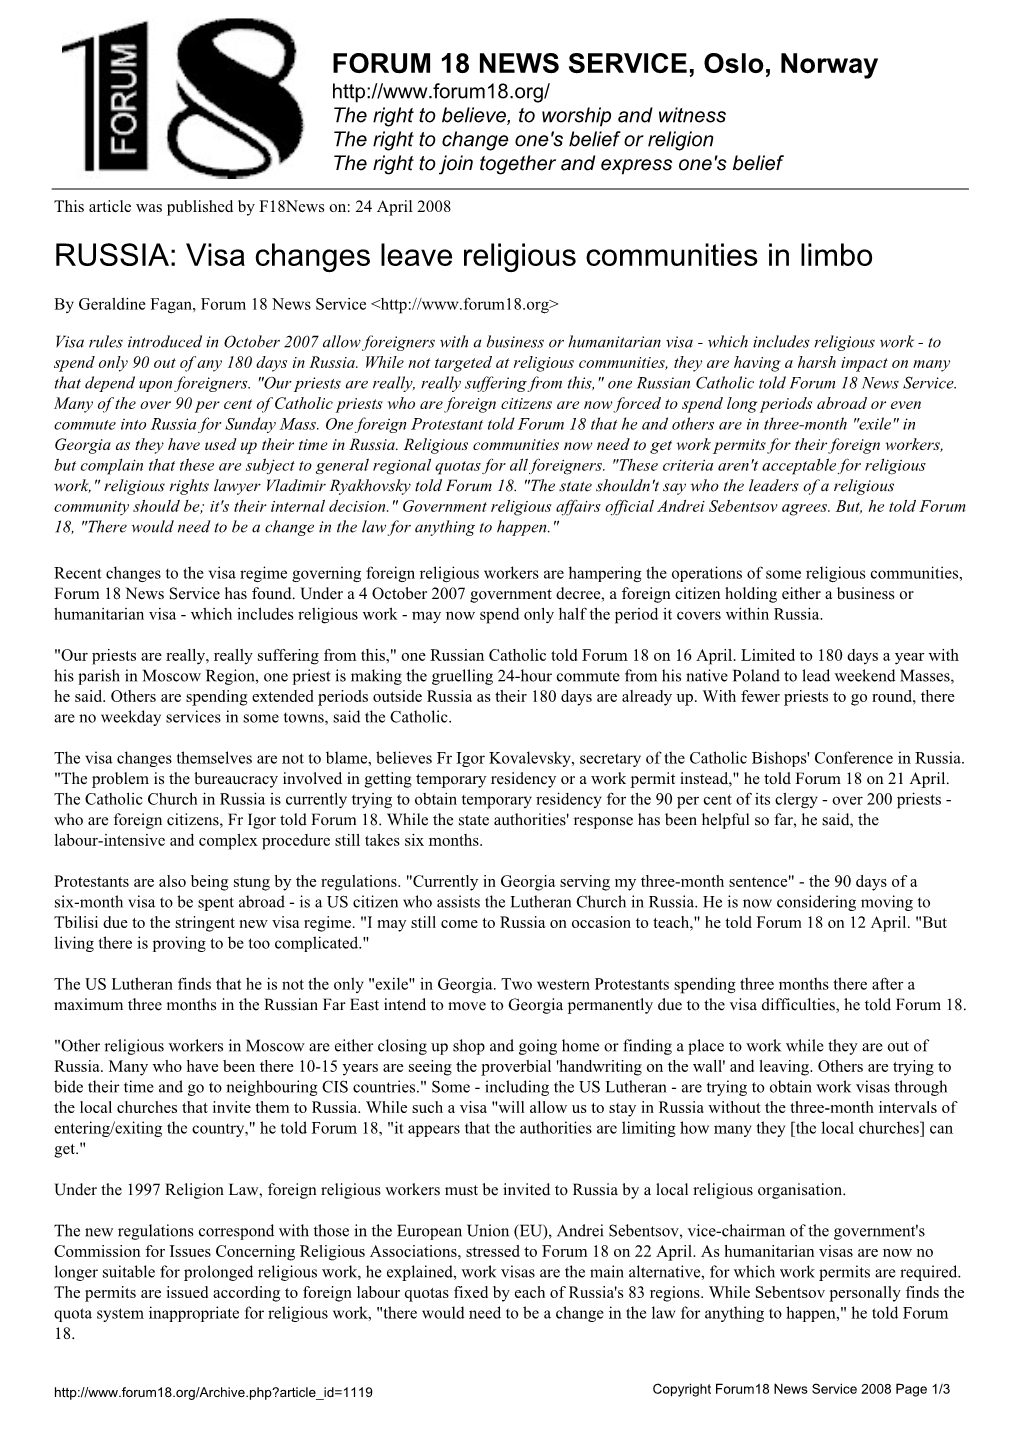 Visa Changes Leave Religious Communities in Limbo